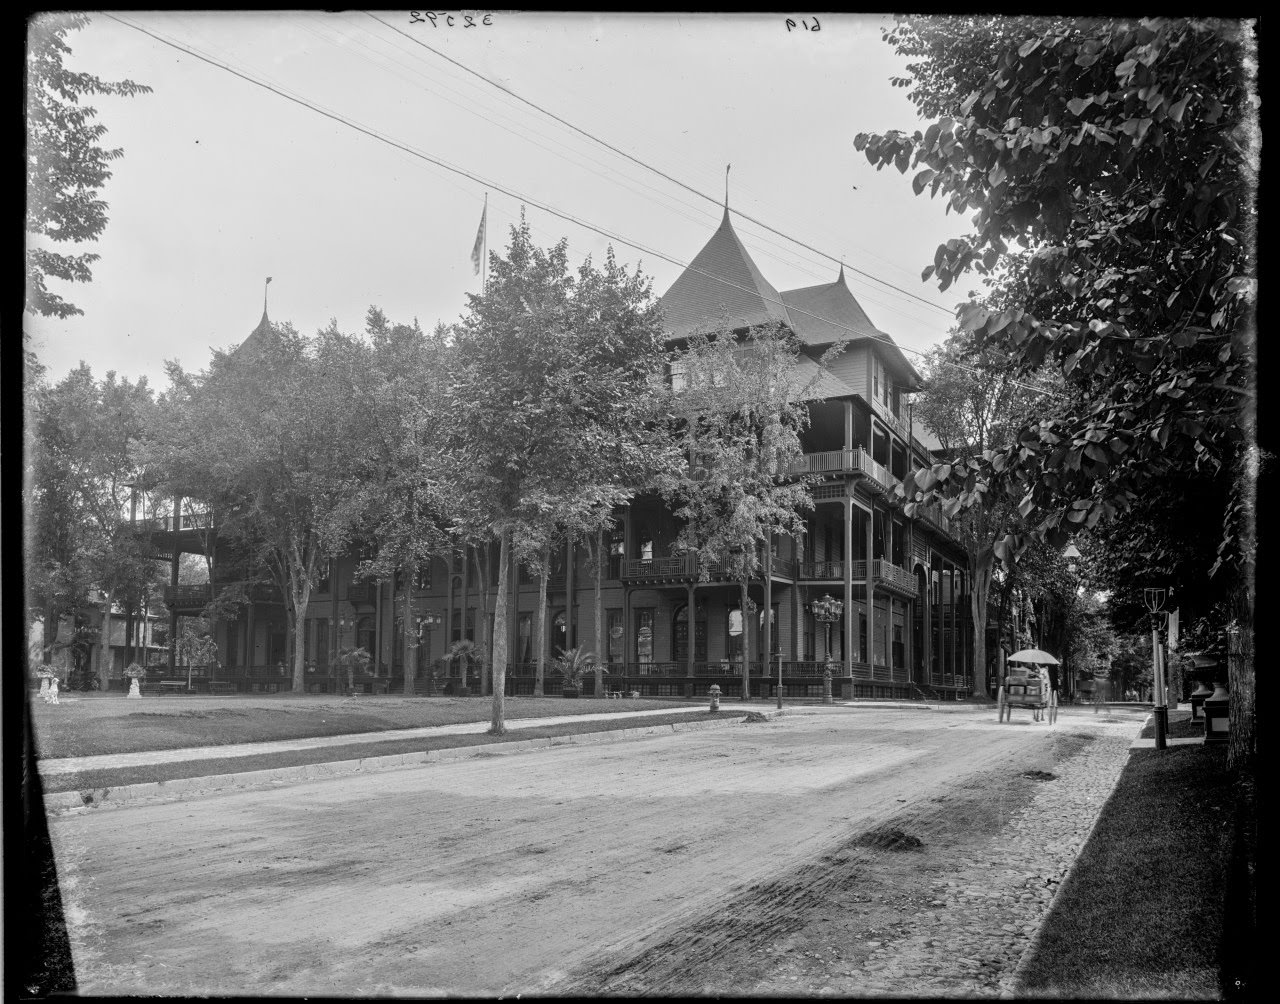 The Windsor Hotel, Broadway and WIlliam Street, Saratoga, 1900